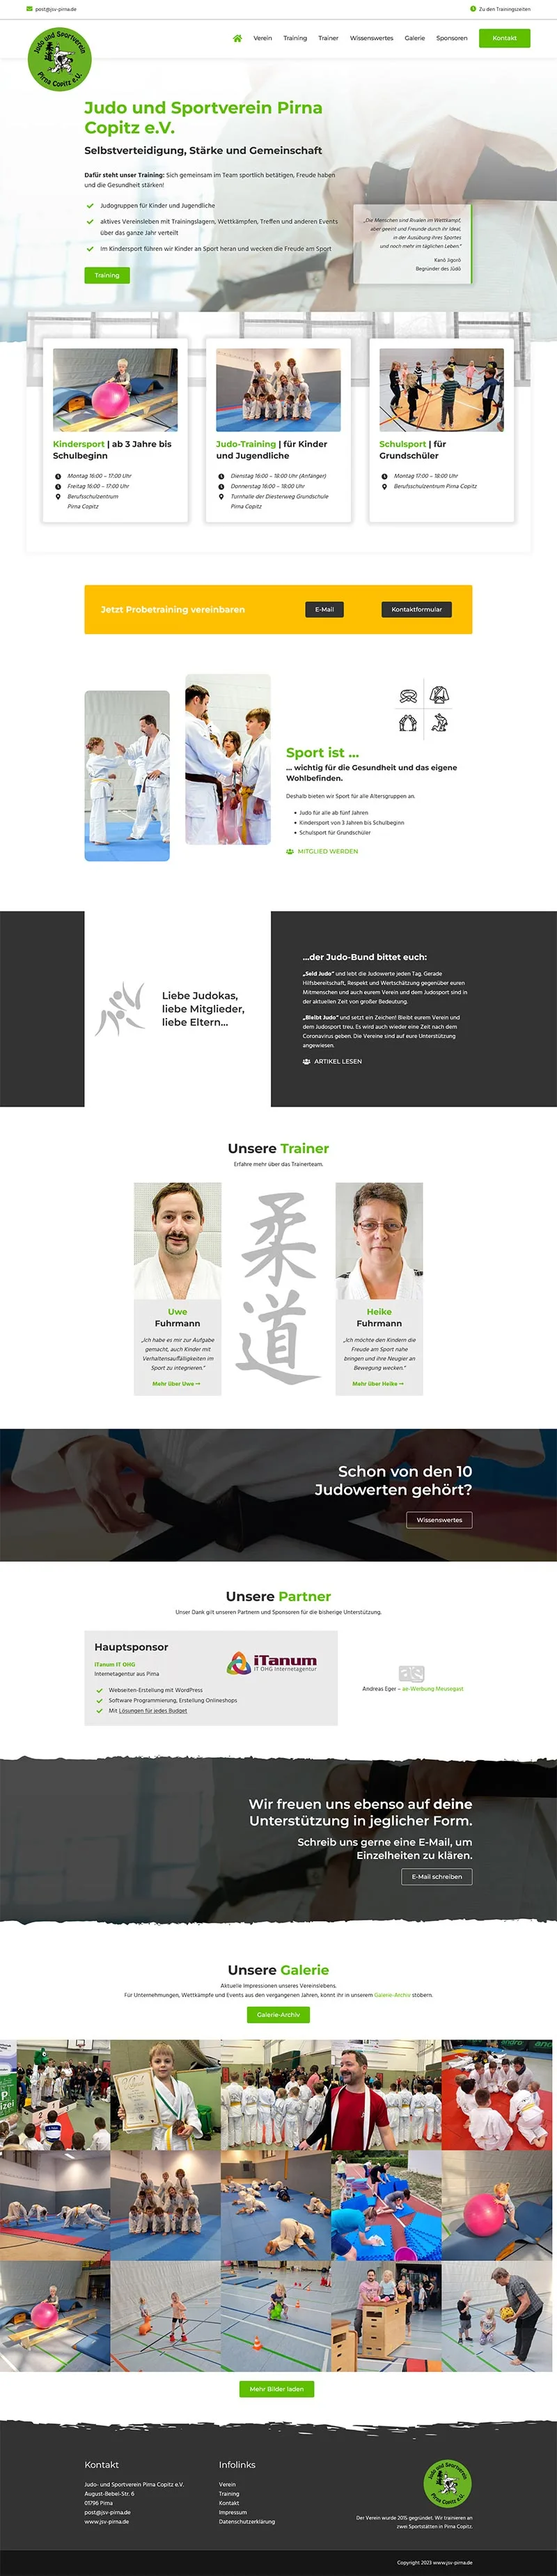 Judo und Sportverein Pirna Copitz e.V. - Screenshot Fullsize Startseite